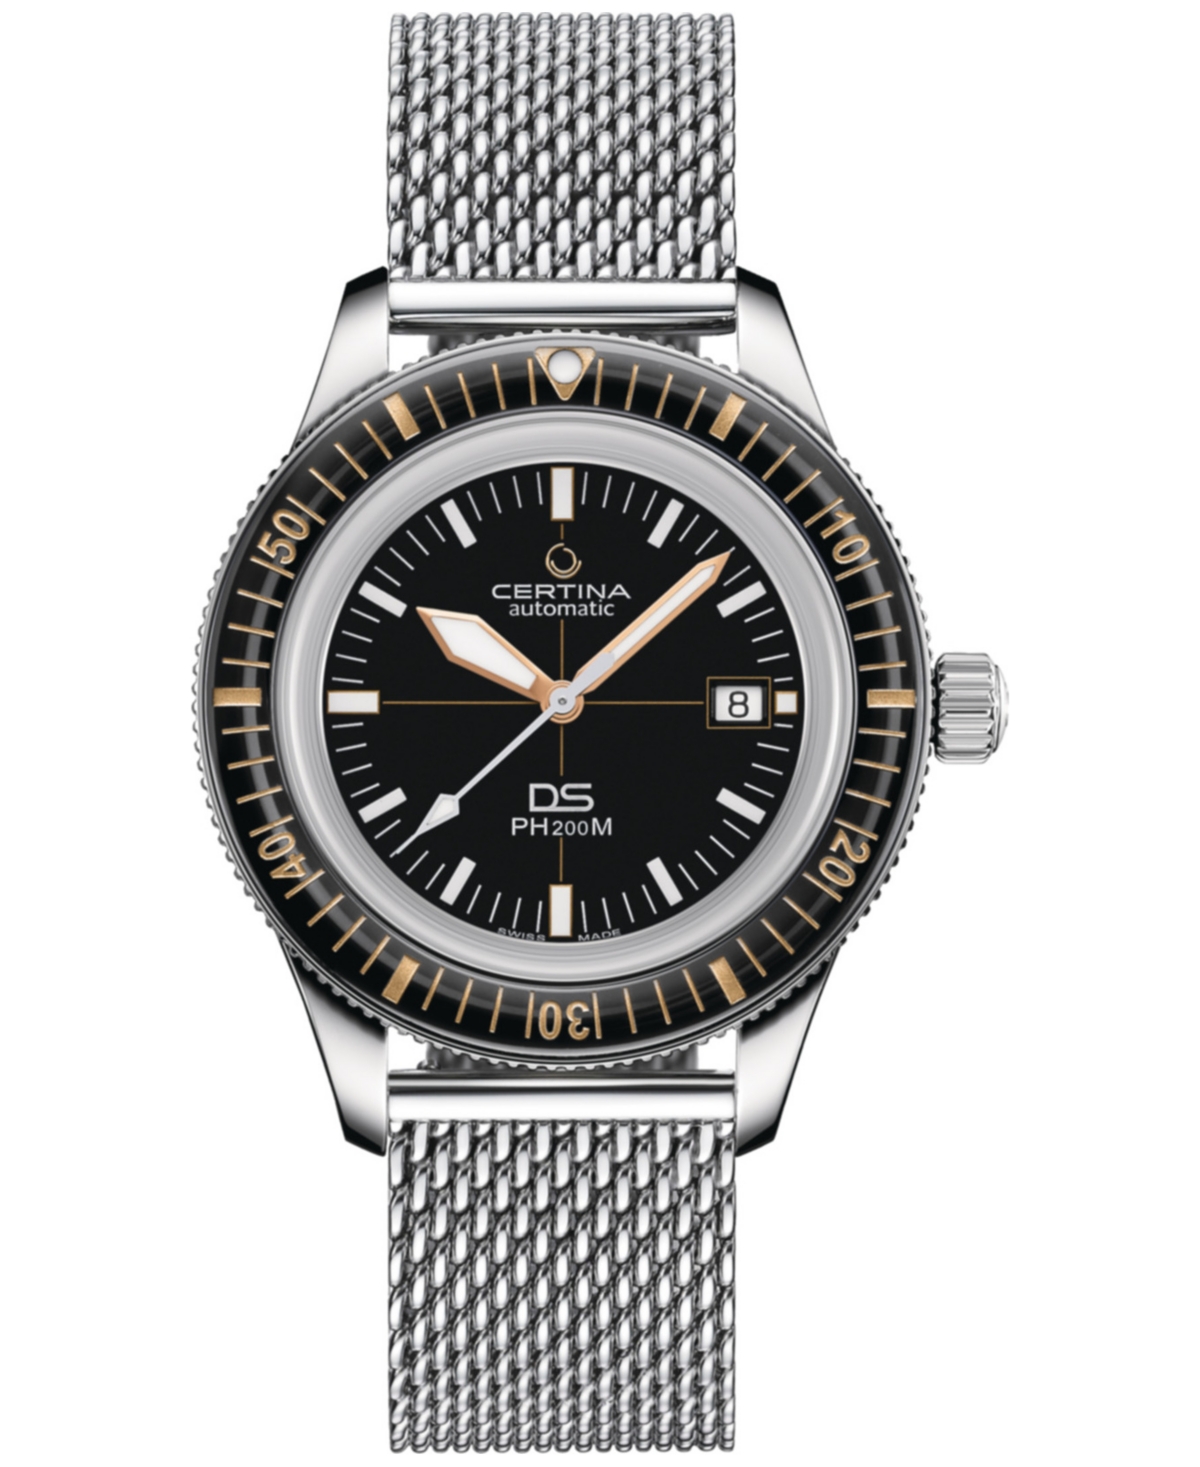 Men's Swiss Automatic Ds PH200M Stainless Steel Mesh Bracelet Watch 43mm - Black